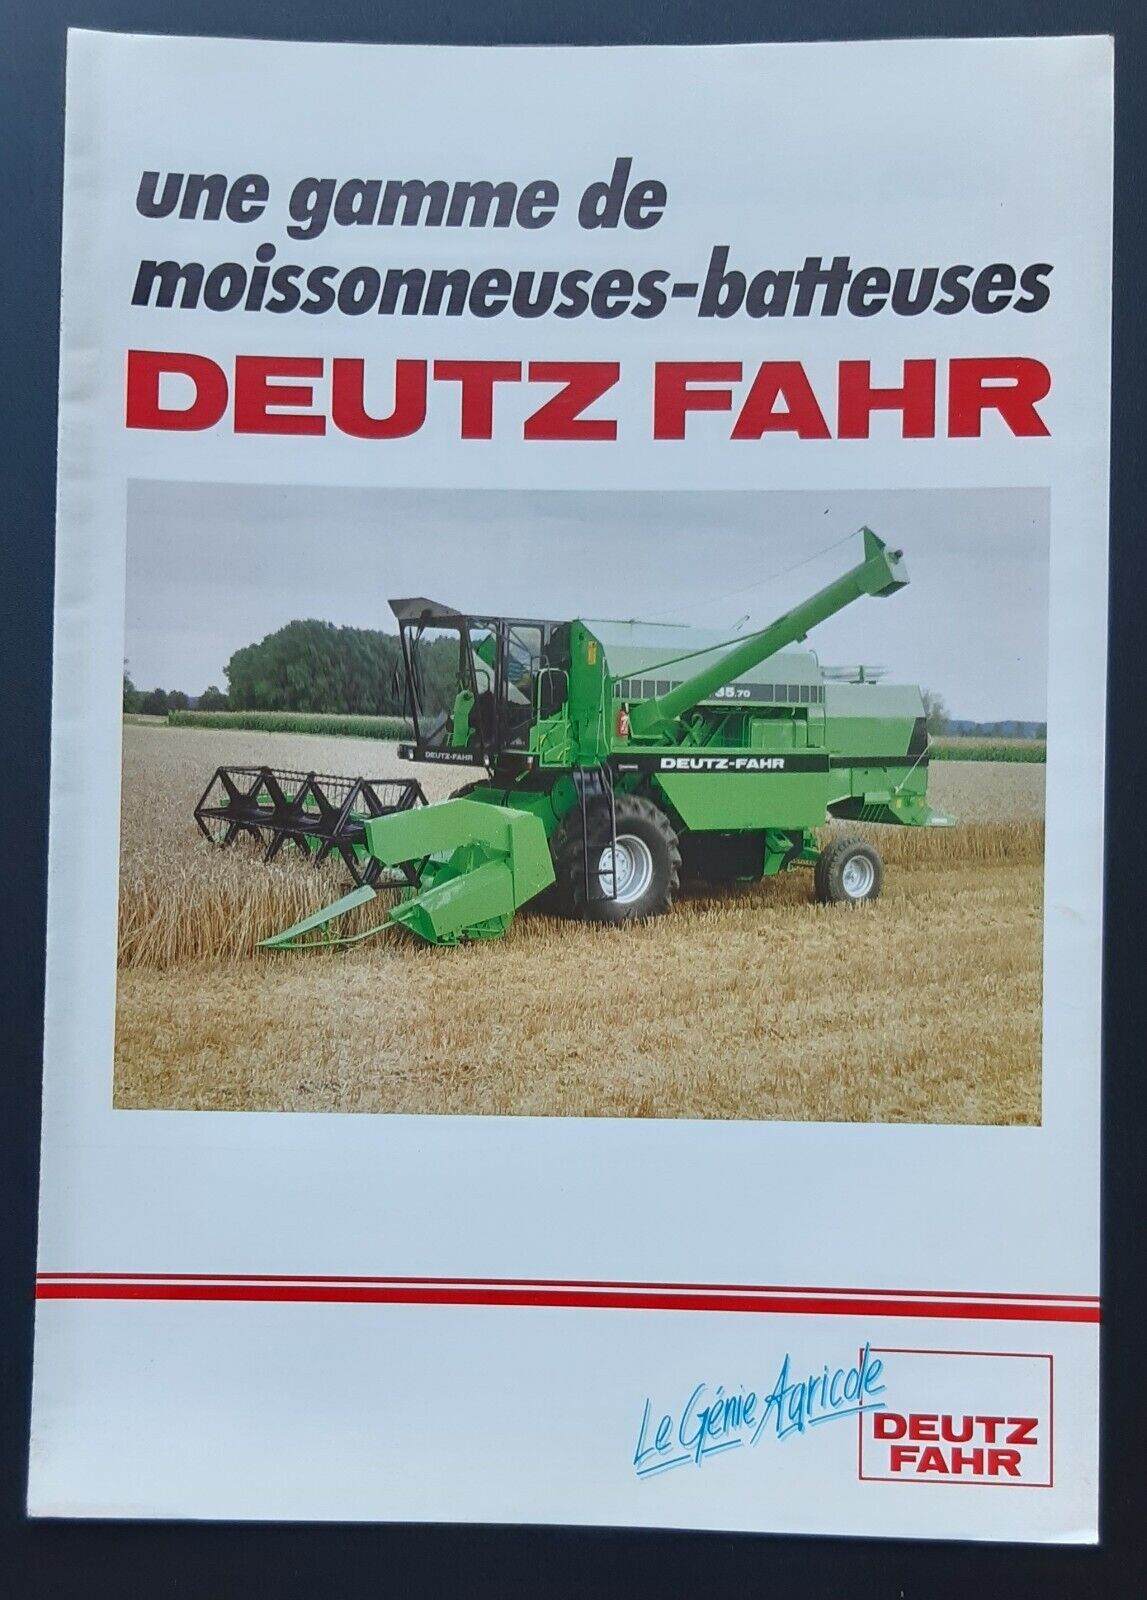 Leaflet Tractor Booklet Deutz Fahr Combine Harvester 8 5/16x11 13/16in 2 Pages